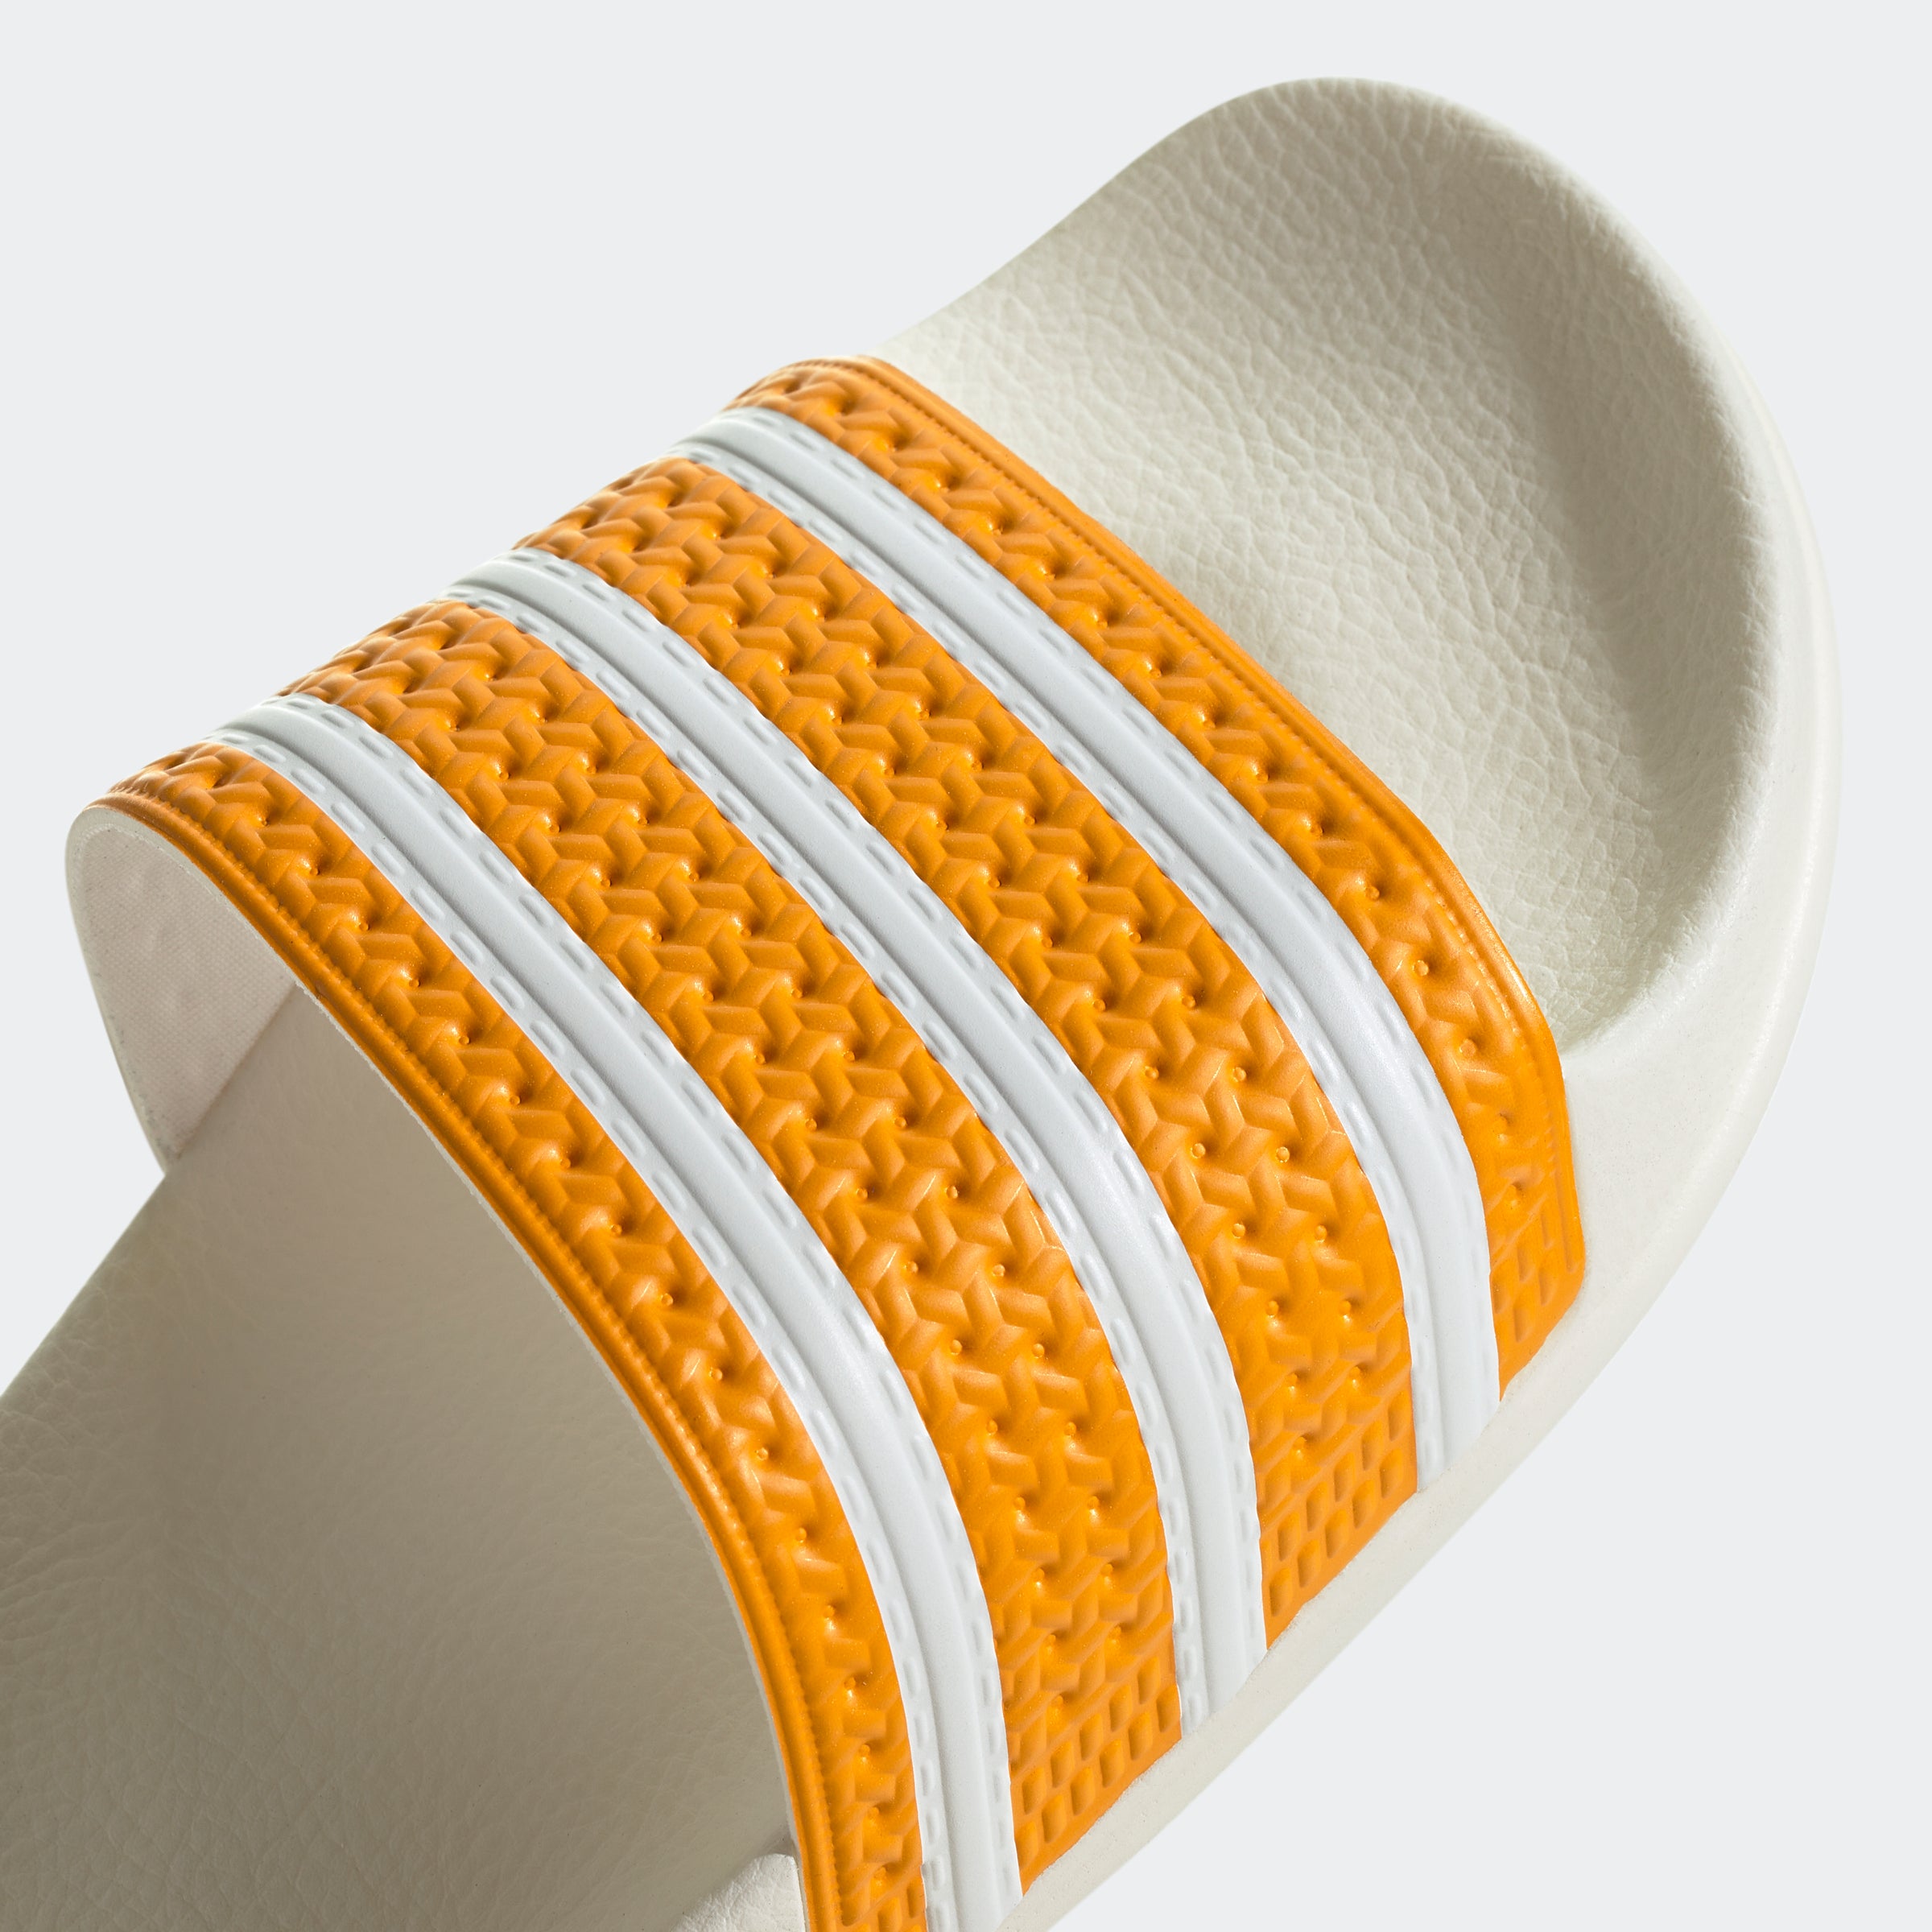 Adidas Adilette White Orange